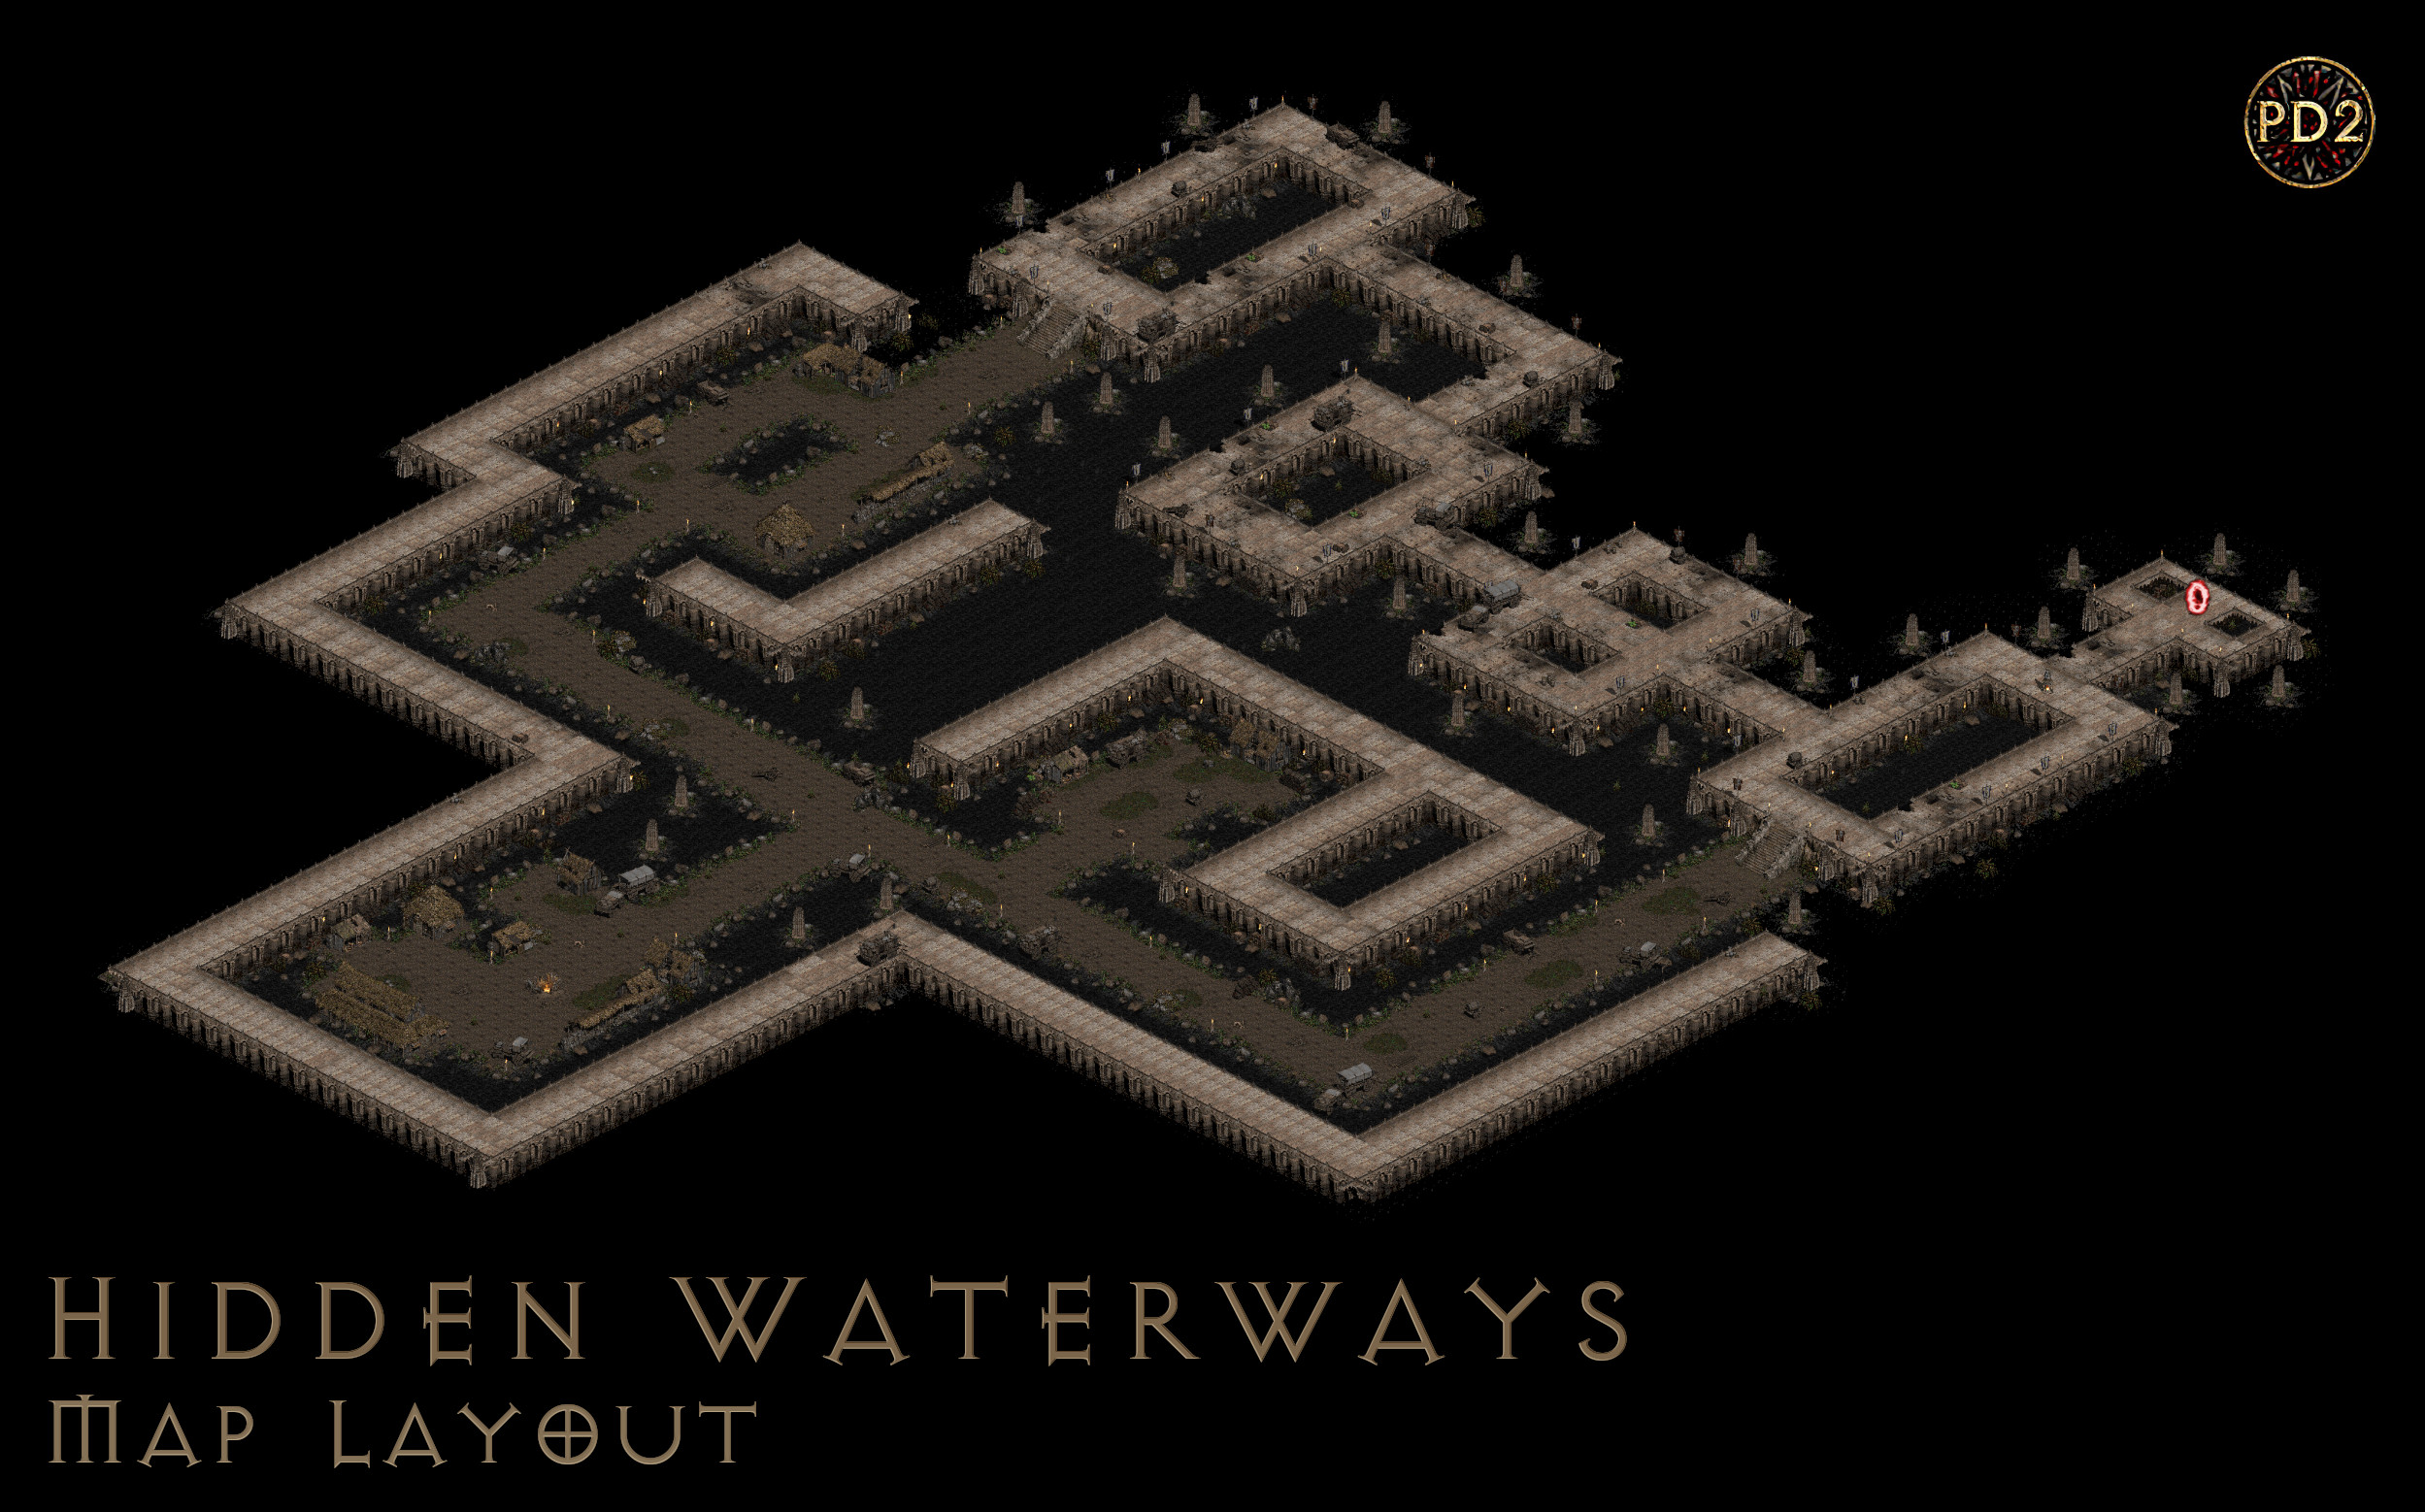 Hidden-waterways.jpg